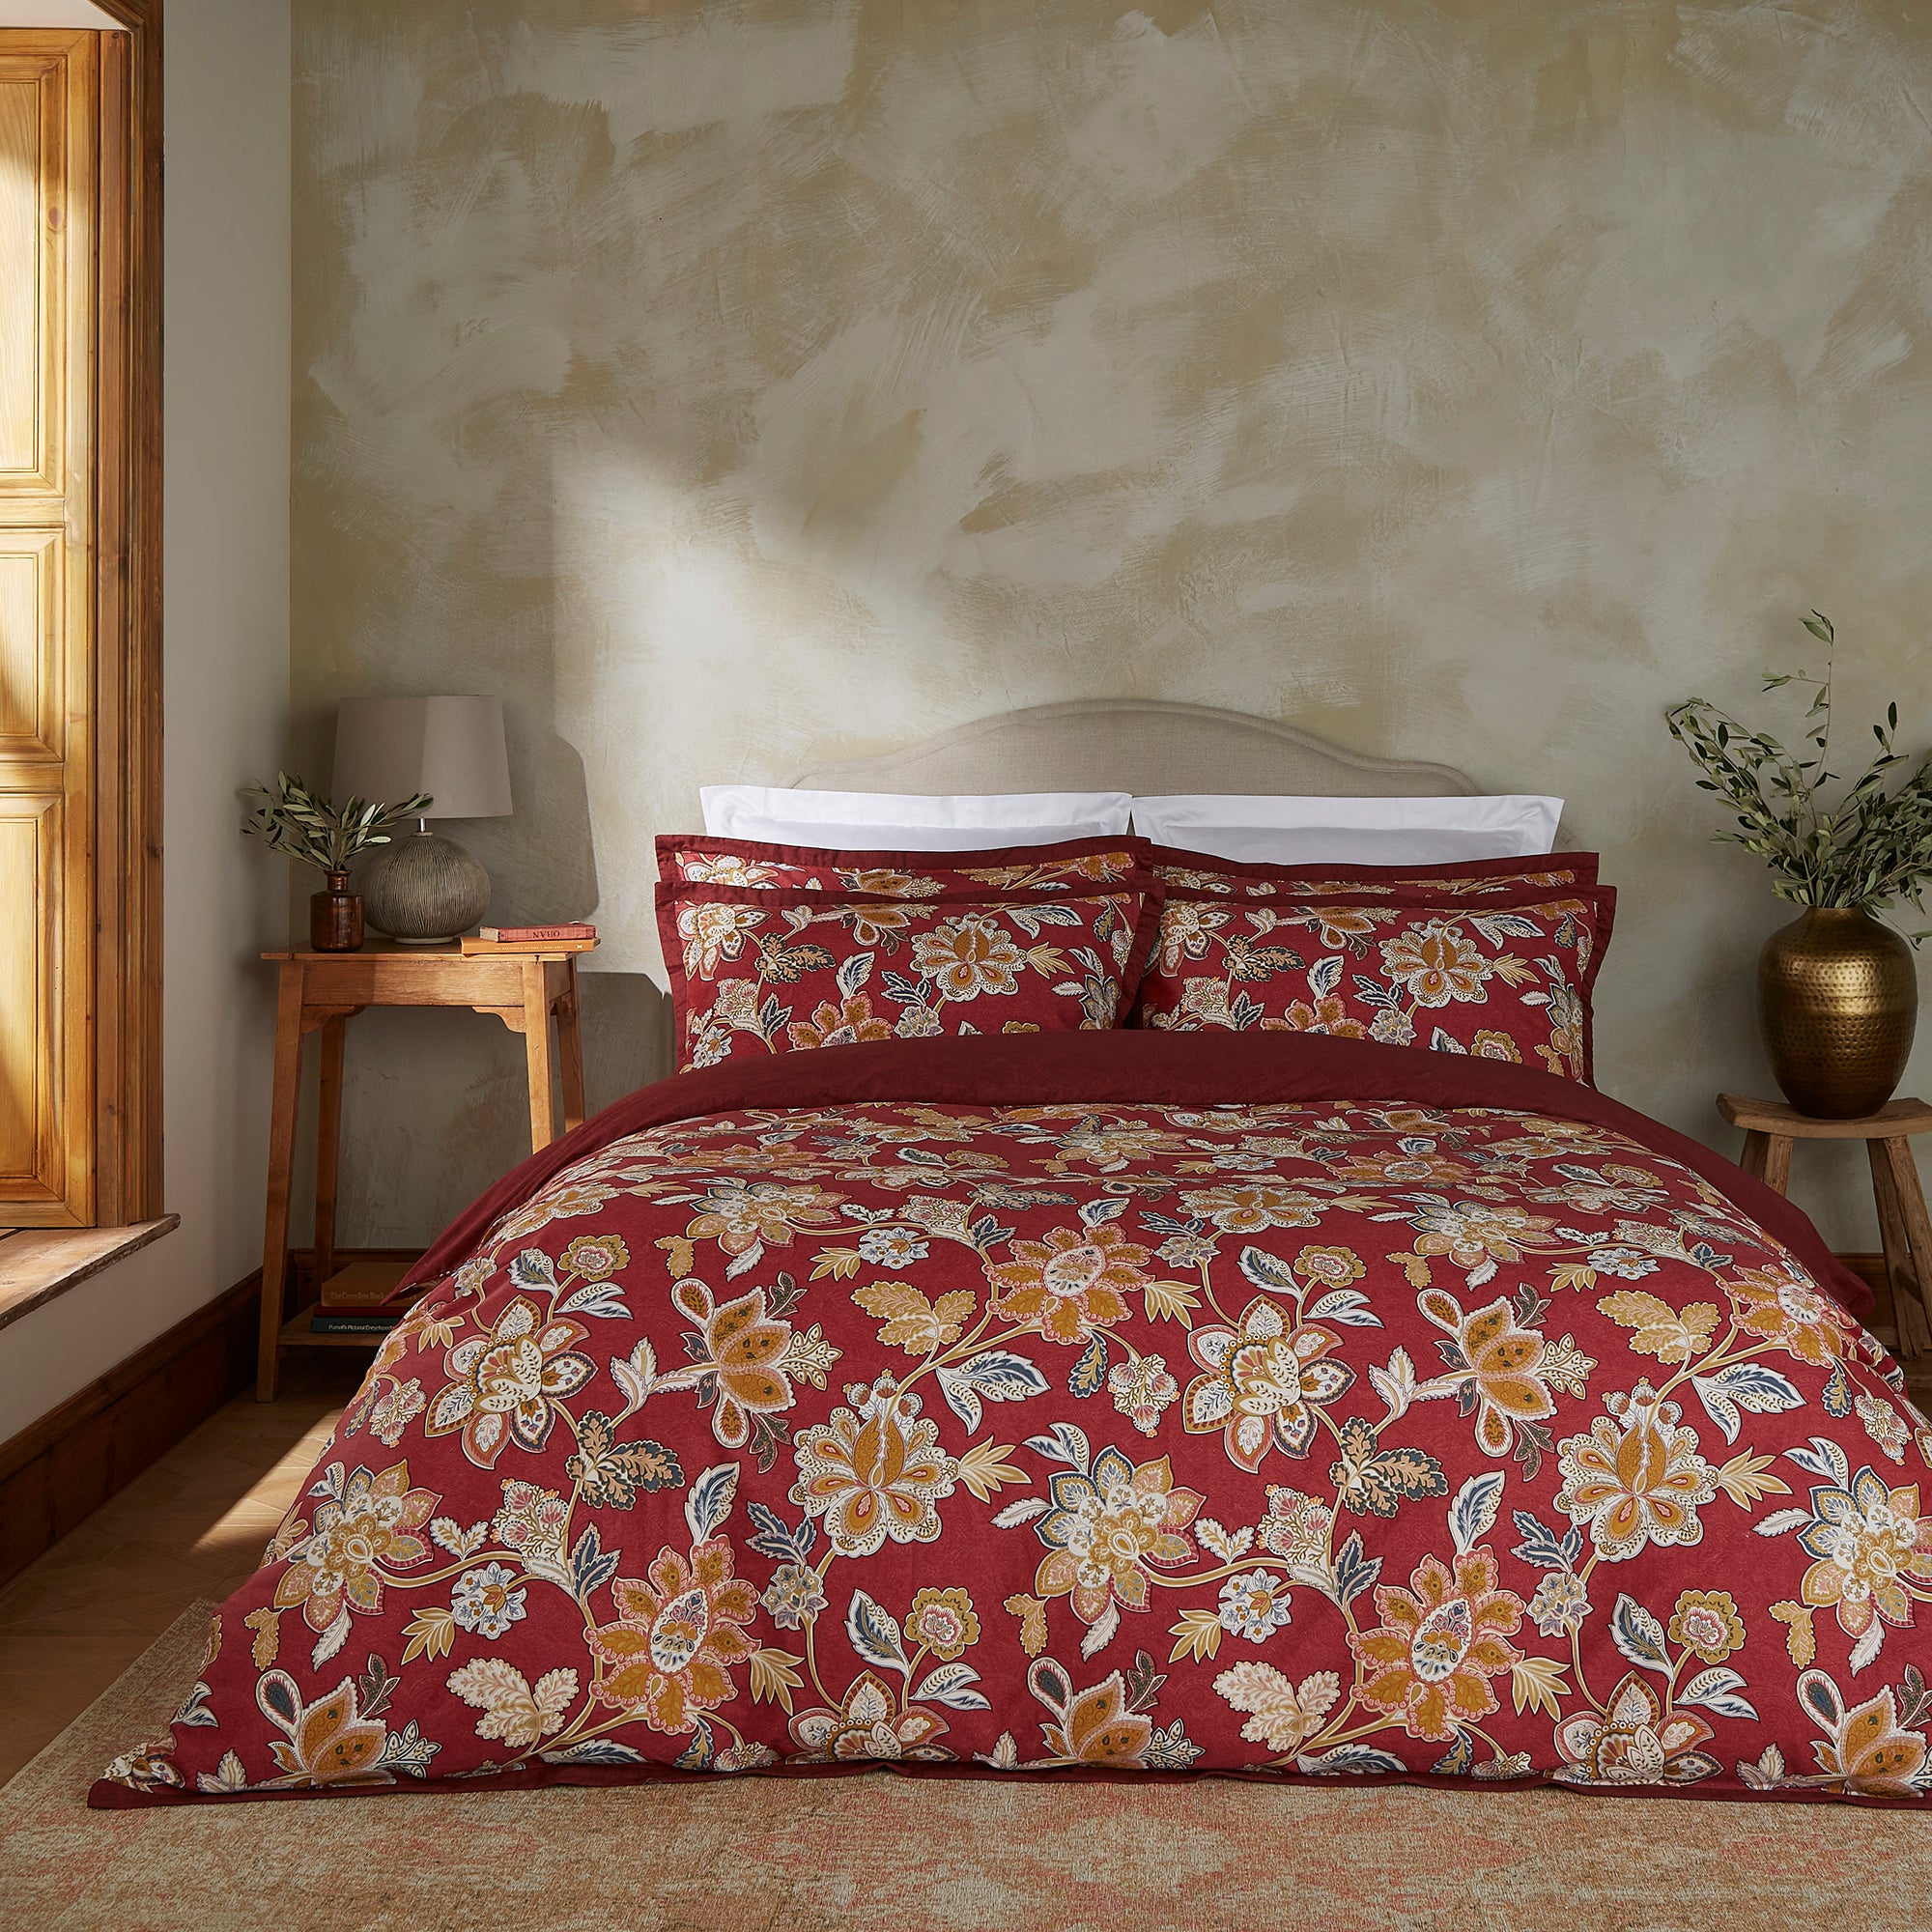 Dorma Samira Saffron Red Cotton Duvet Cover and Pillowcase Set Red/Orange